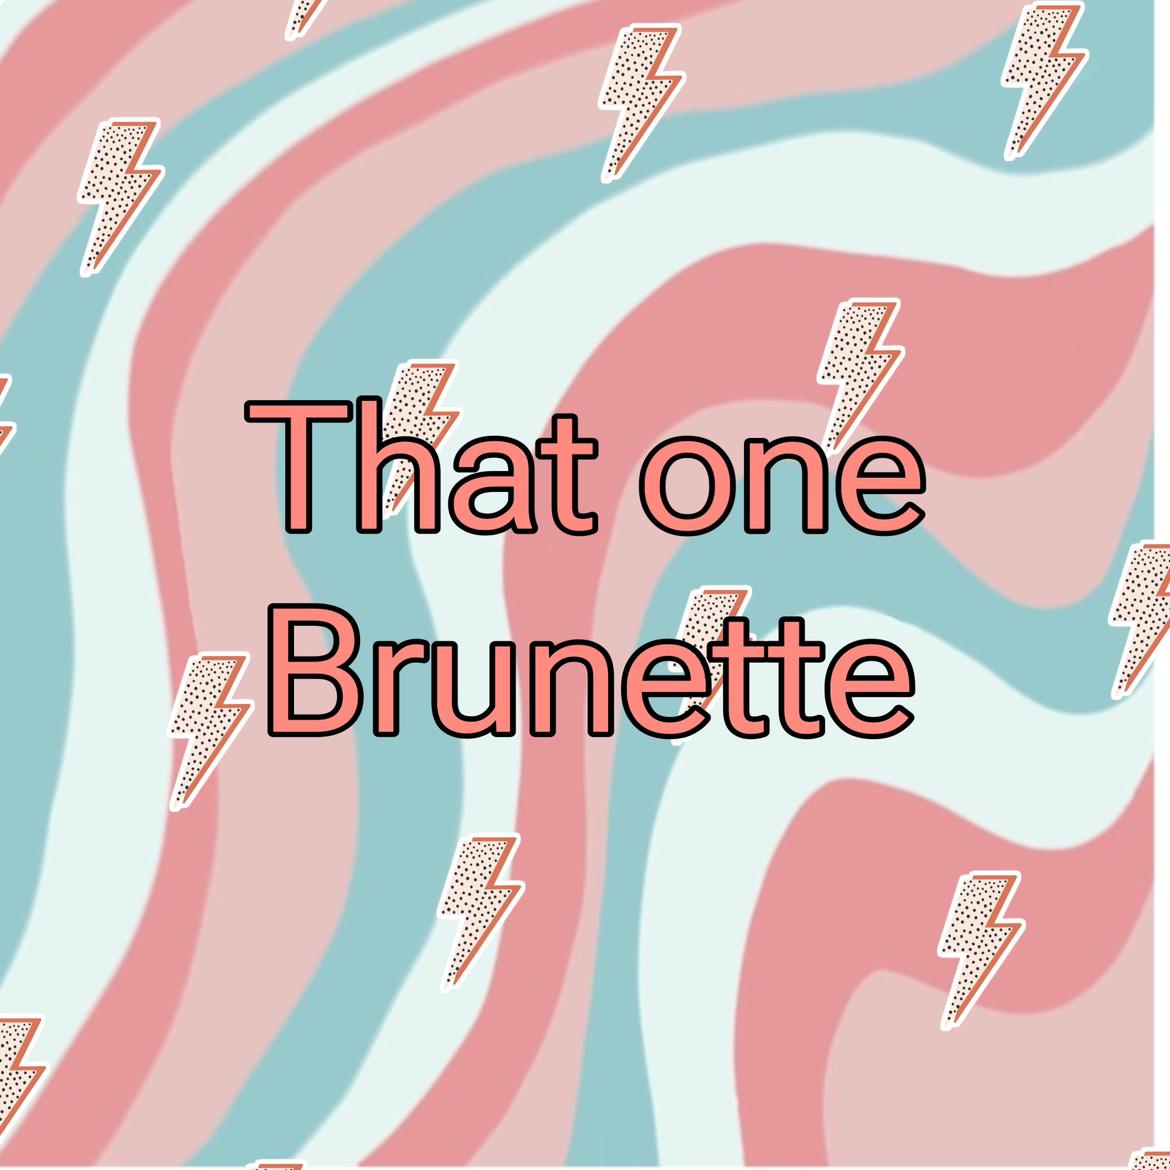 Thatonebrunette's images